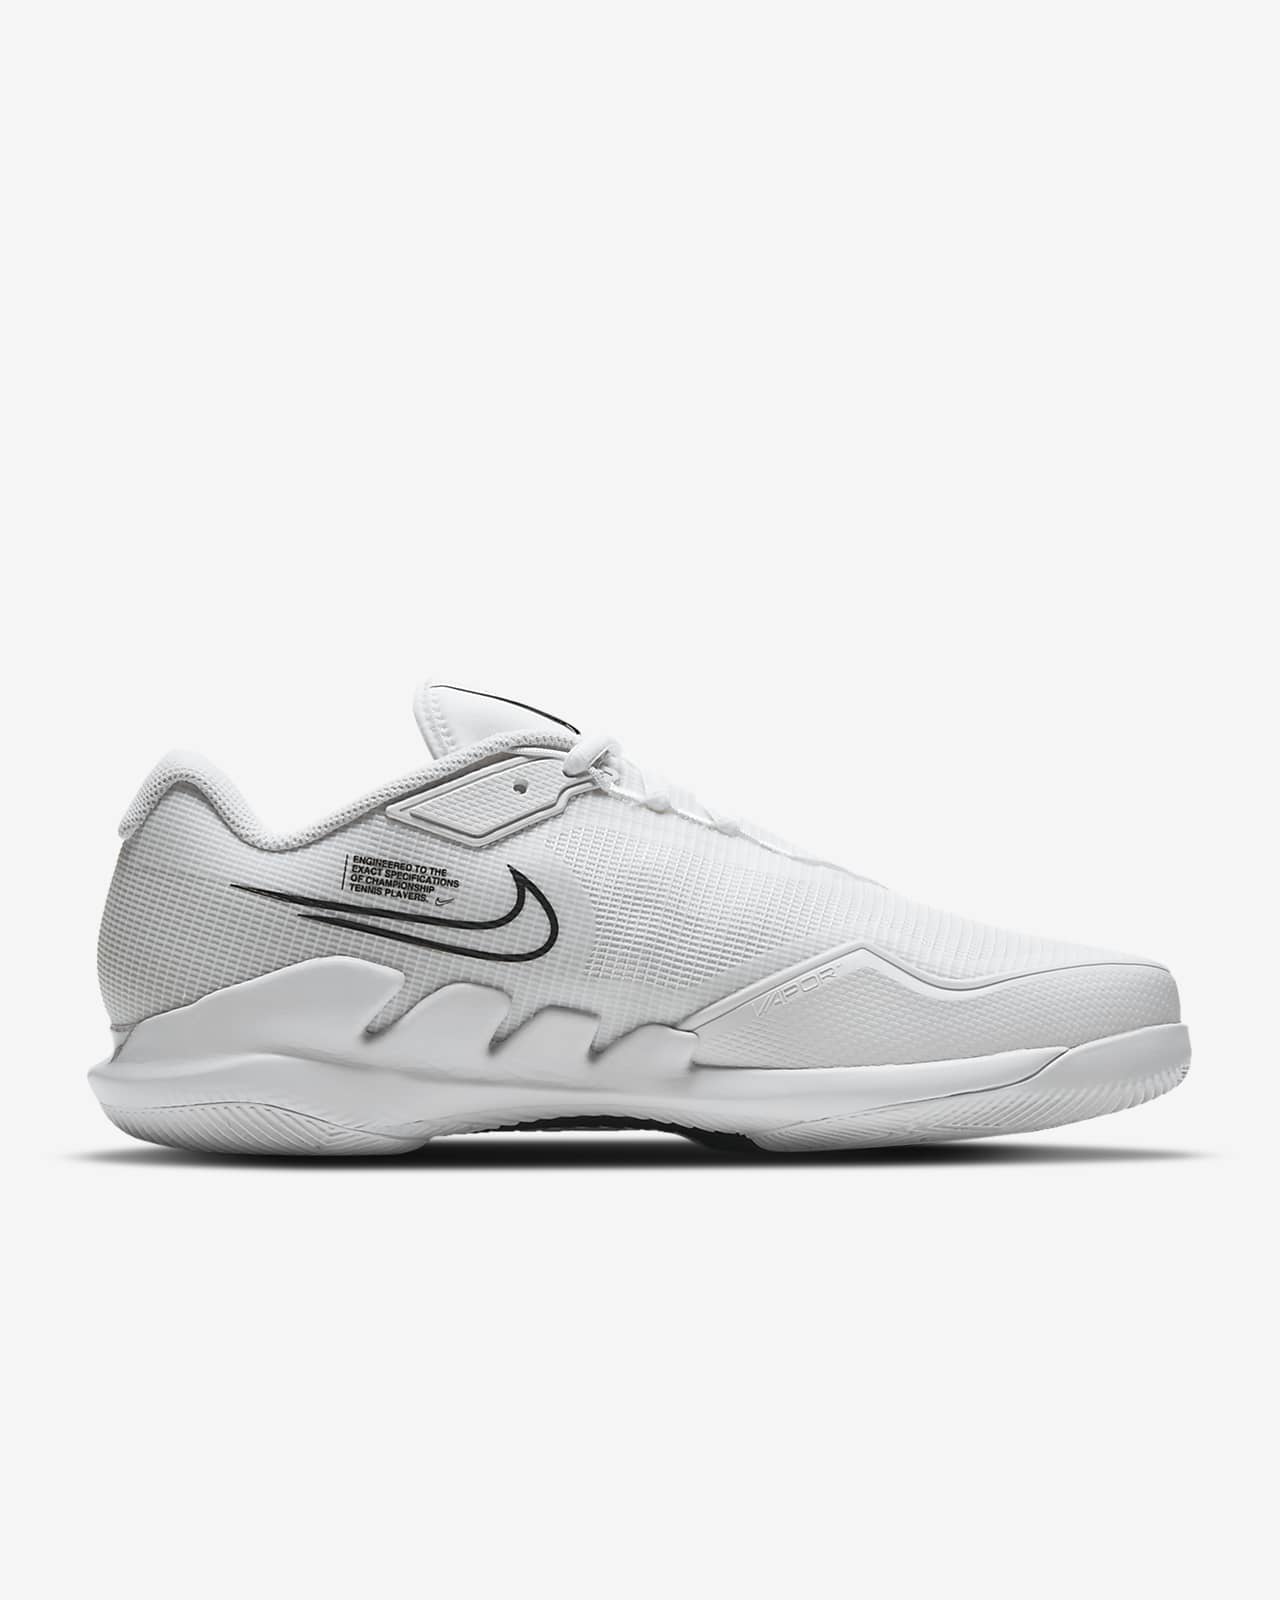 NikeCourt Air Zoom Vapor Pro Men's Hard-Court Tennis Shoe. Nike LU